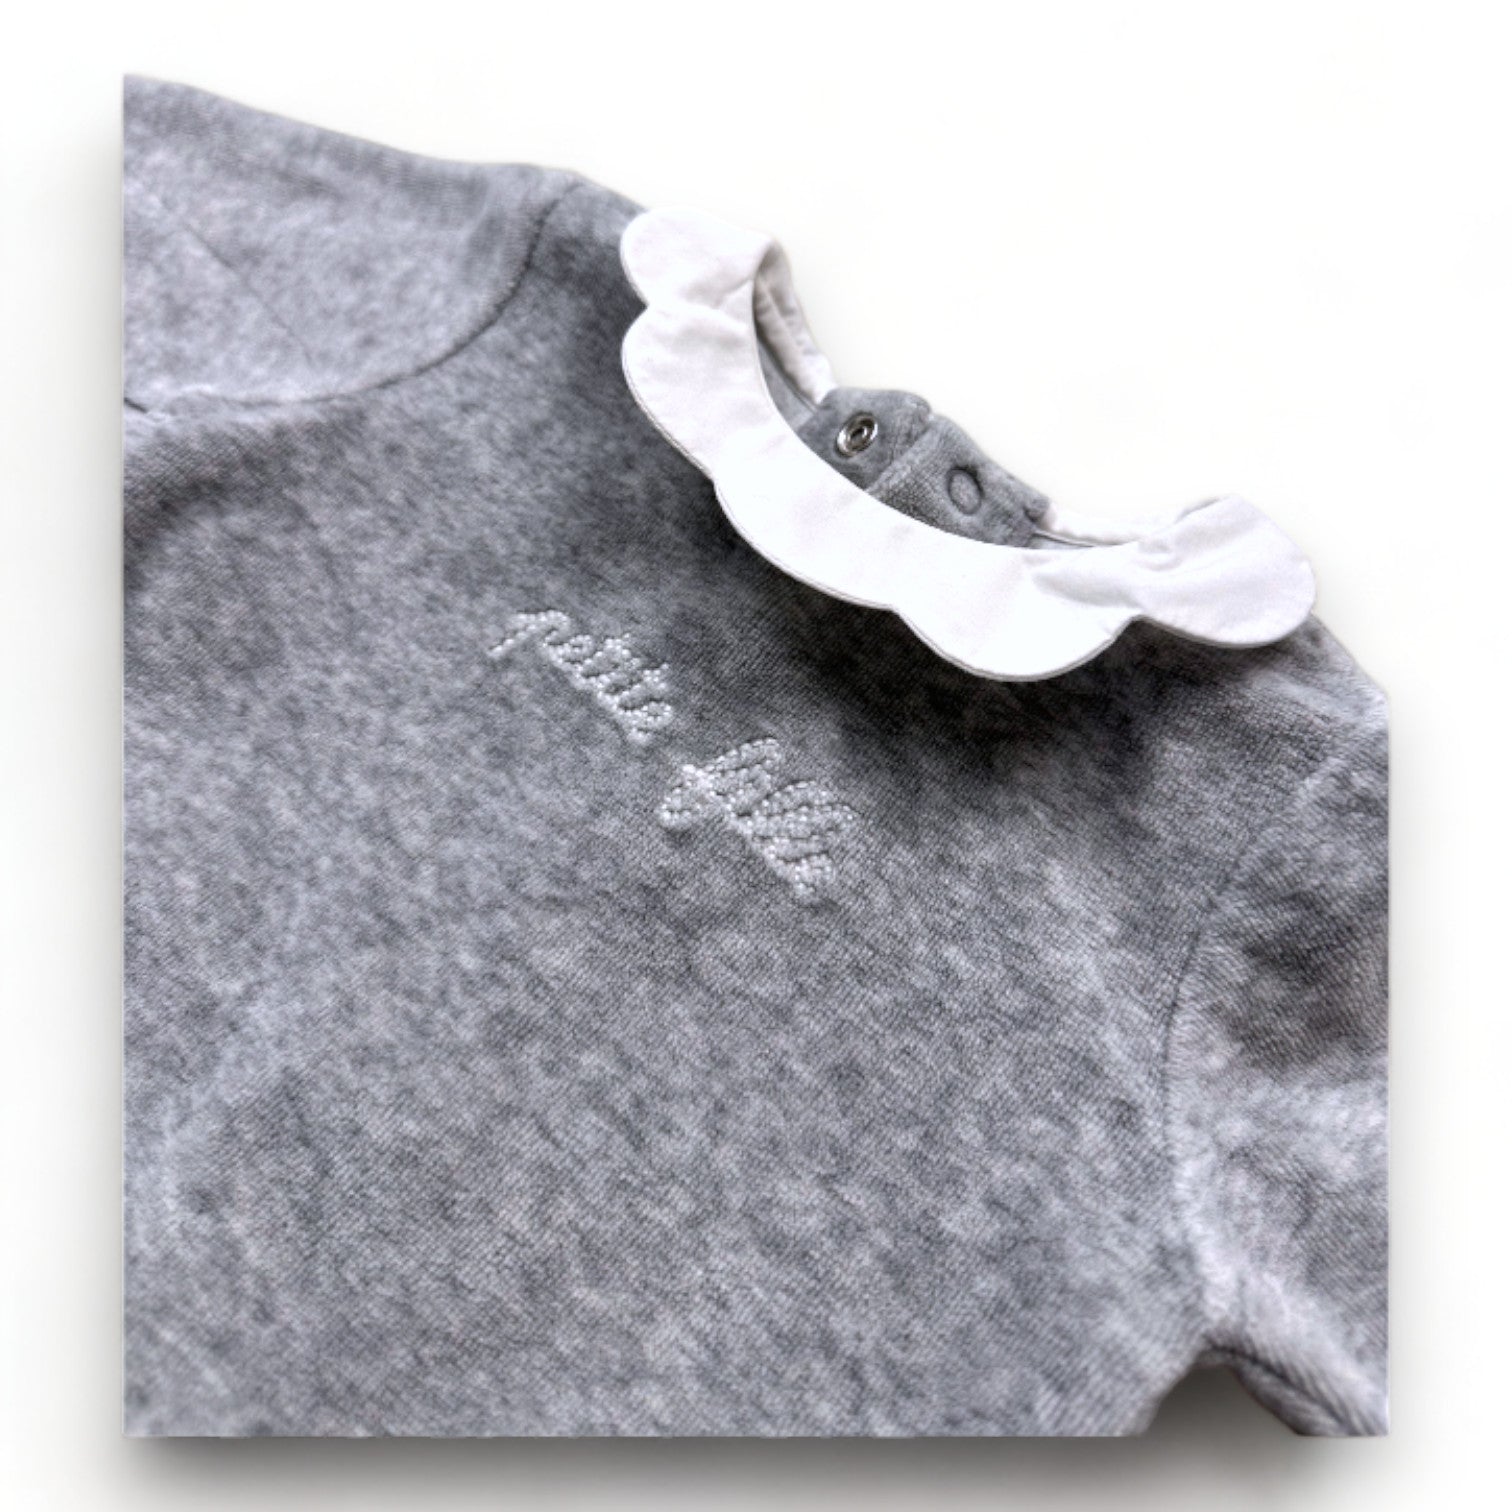 JACADI - Pyjama gris avec col blanc - 12 mois